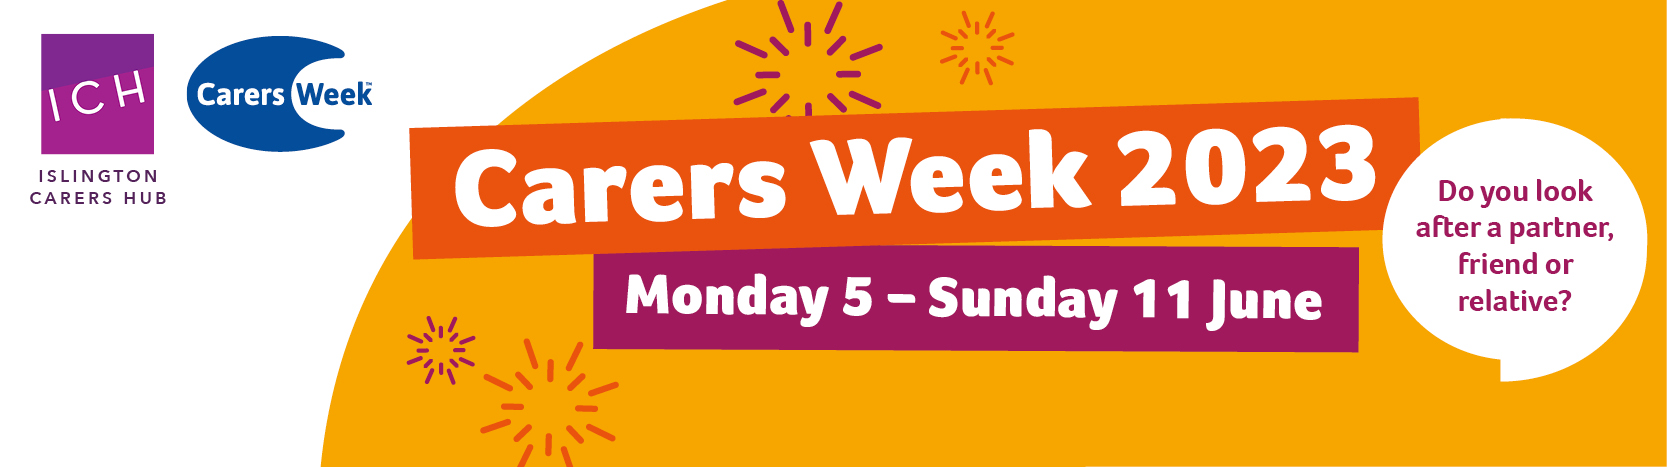 Carers Week 2023 Mon 5 - Sunday 11 June